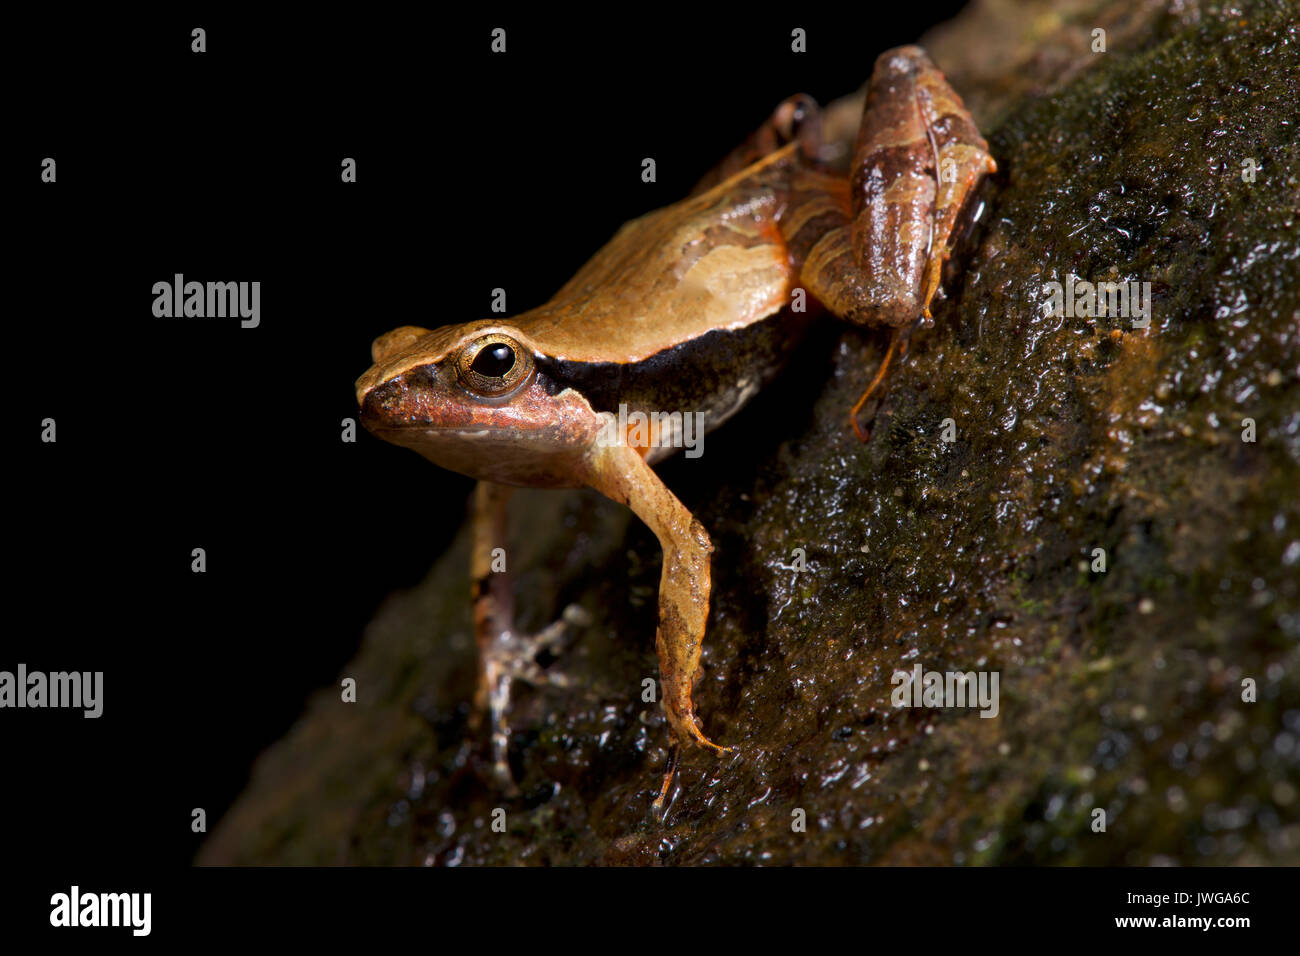 Steindachner's dwarf frog, Physalaemus ephippifer Stock Photo